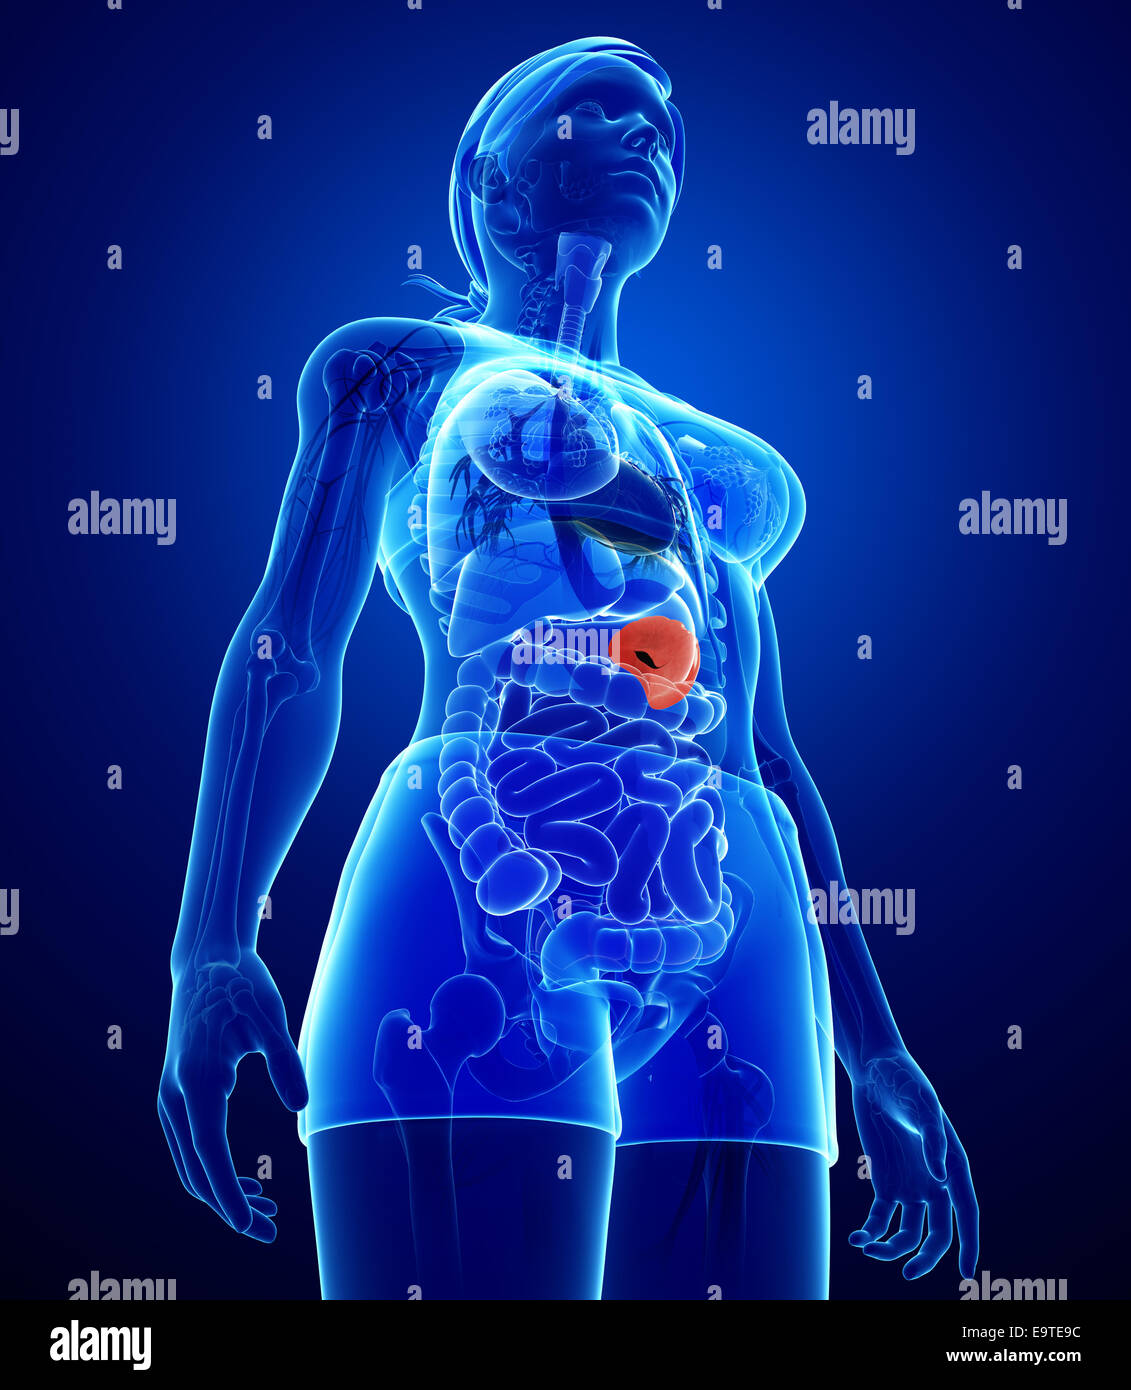 Illustration of Female spleen anatomy Stock Photo - Alamy